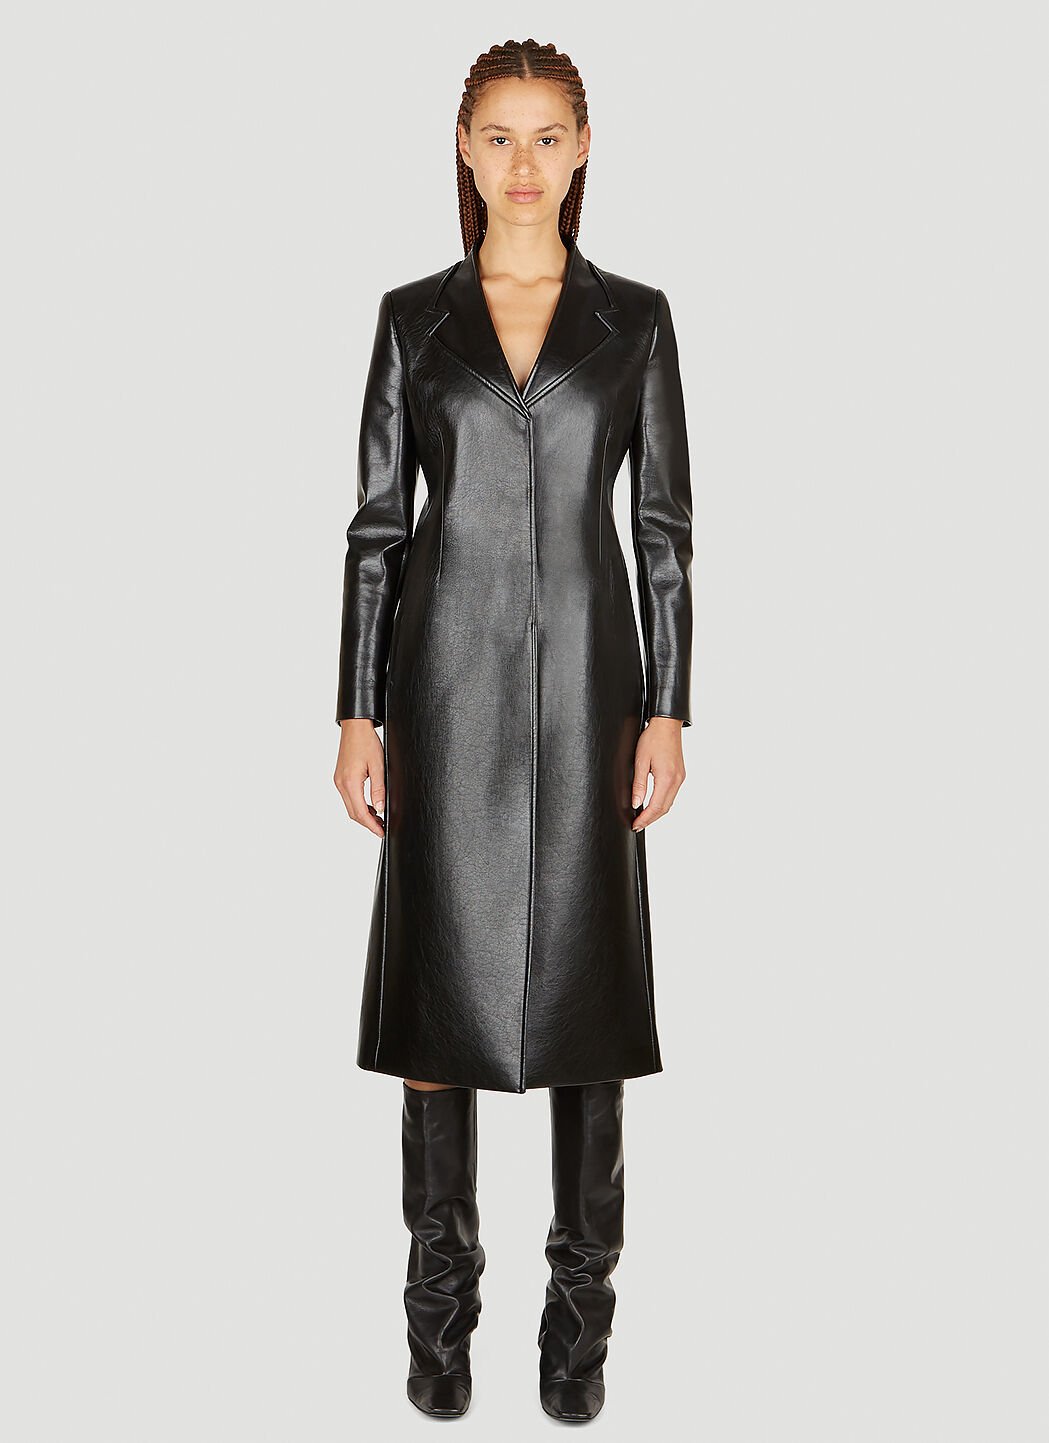 Coperni Trompe-Loeil Tailored Faxu Leather Coat Black cpn0255010